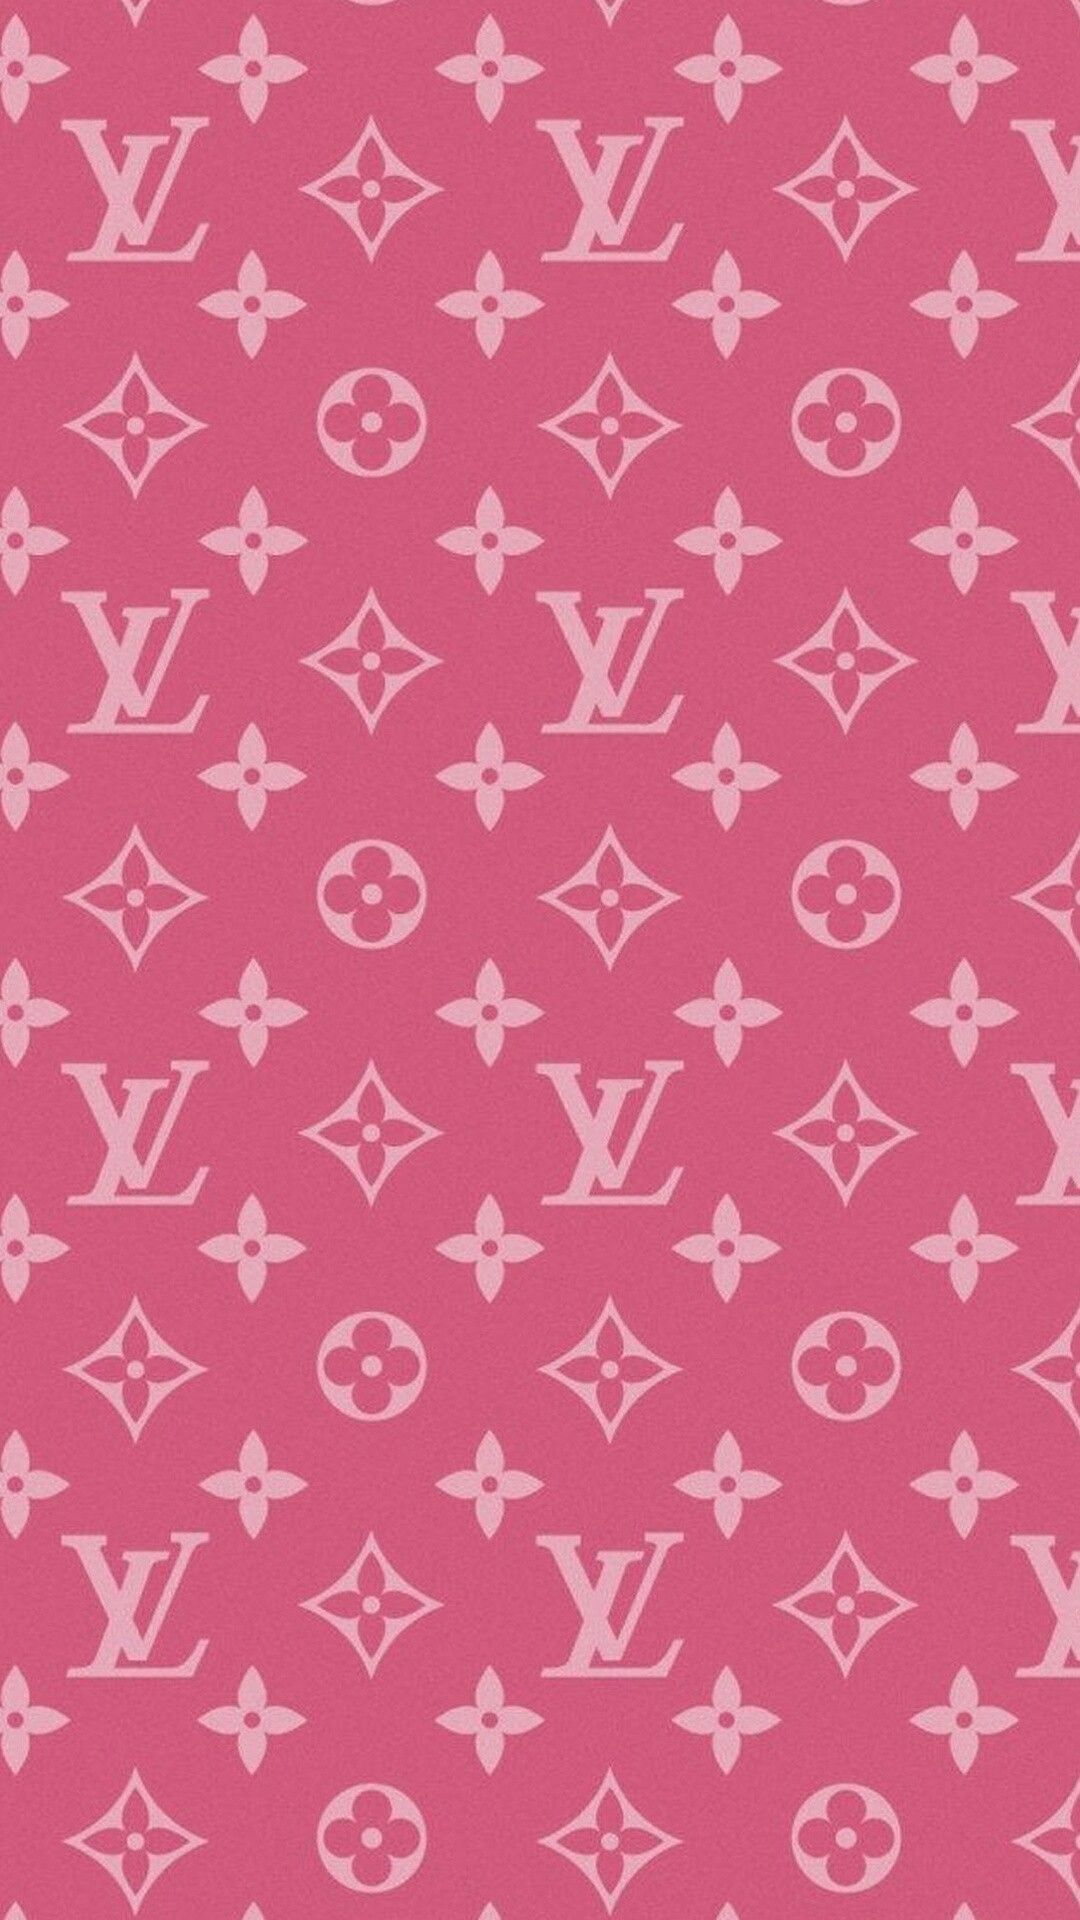 37 Louis Vuitton ideas  louis vuitton iphone wallpaper, louis vuitton,  iphone background wallpaper